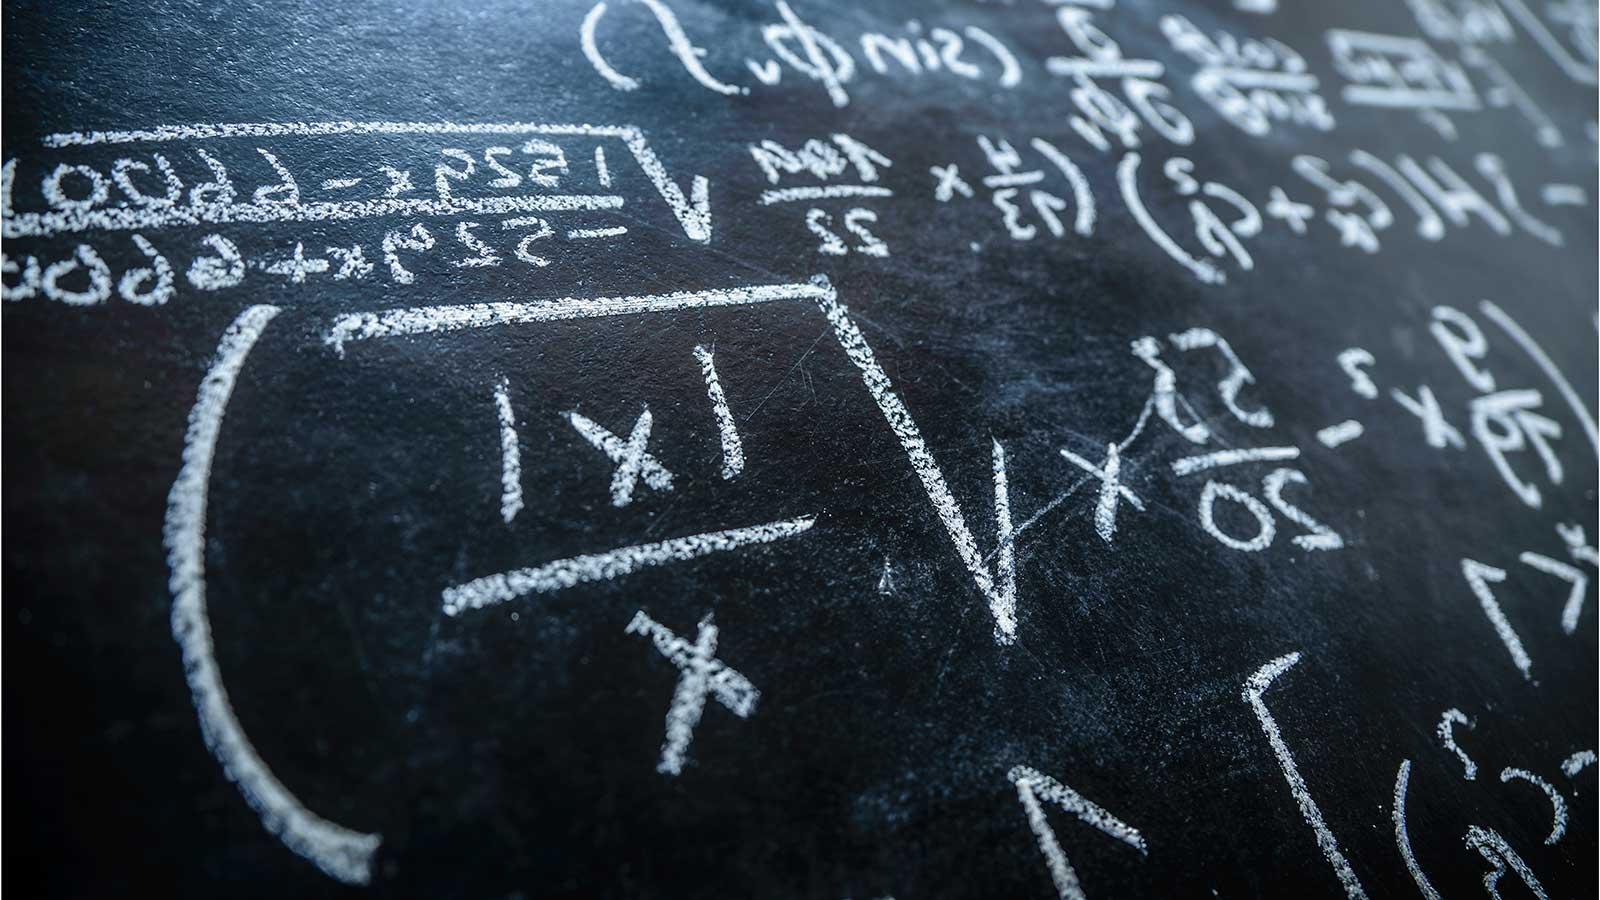 Equation on blackboard representing Applied Mathematics and Statistics program at Clarkson